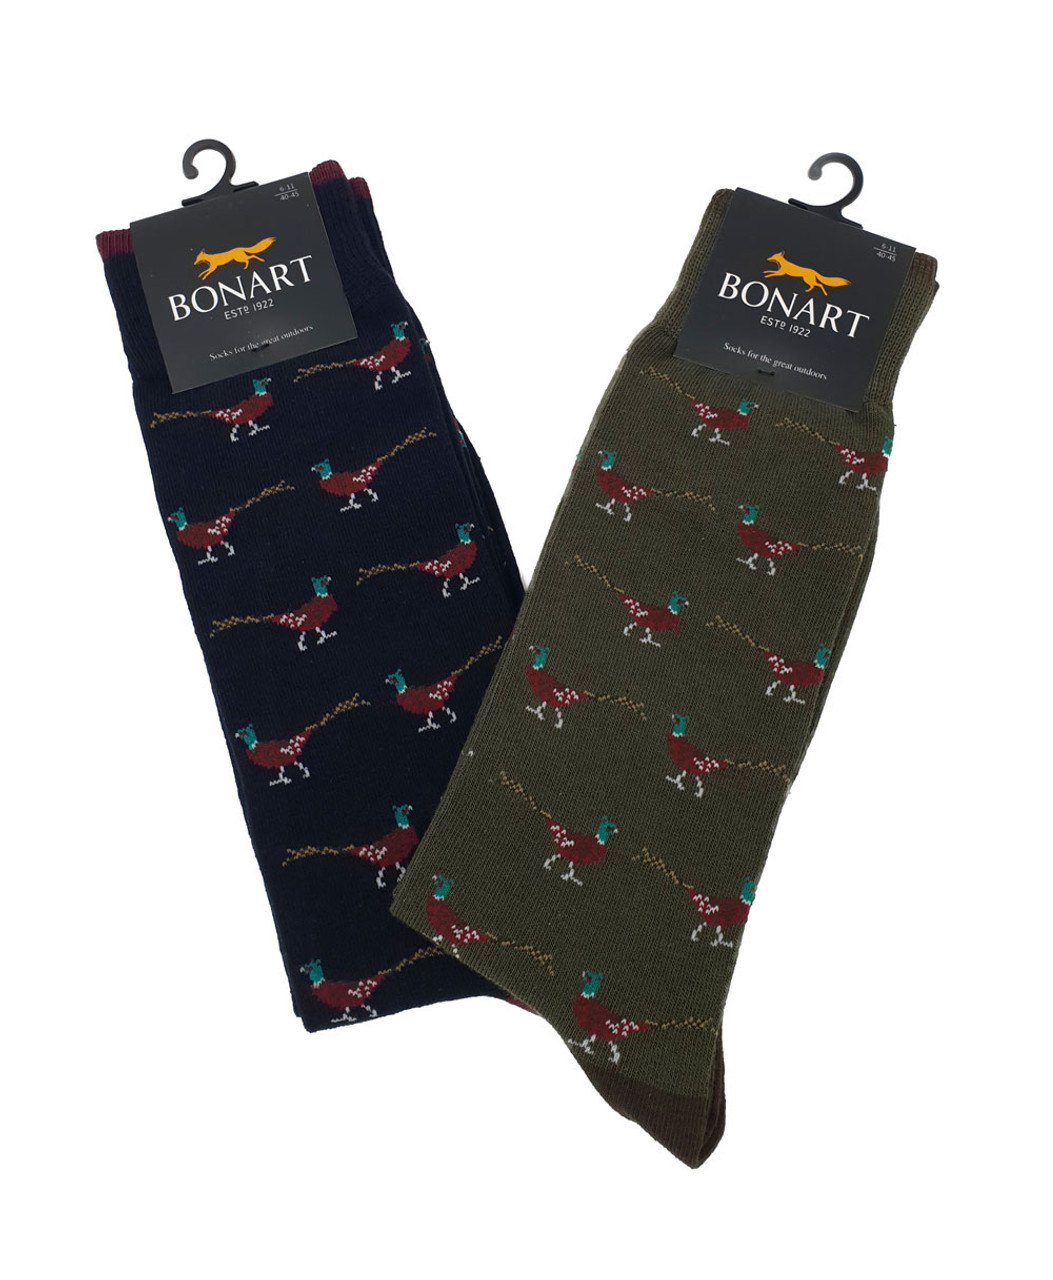 Bonart Poole Pheasant Themed Socks